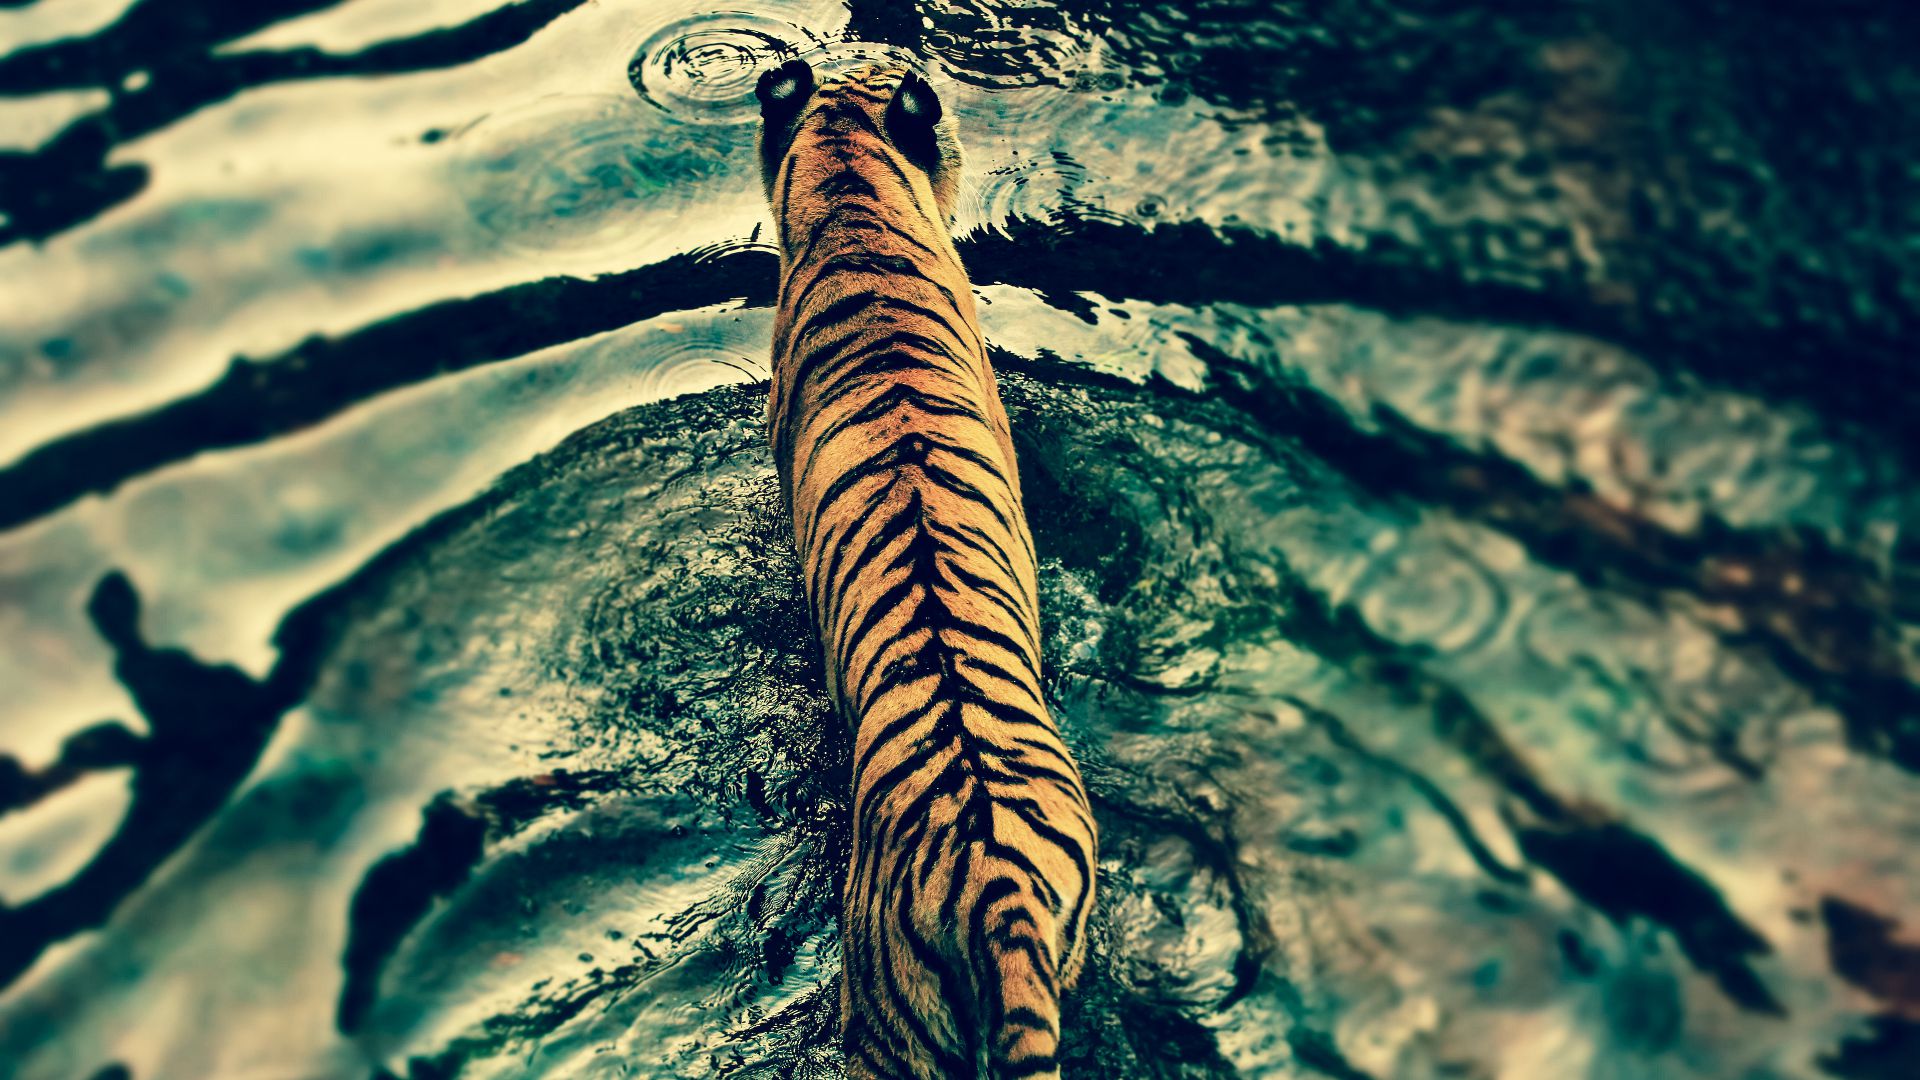 тигр, вода, милые животные, Tiger, water, cute animals (horizontal)